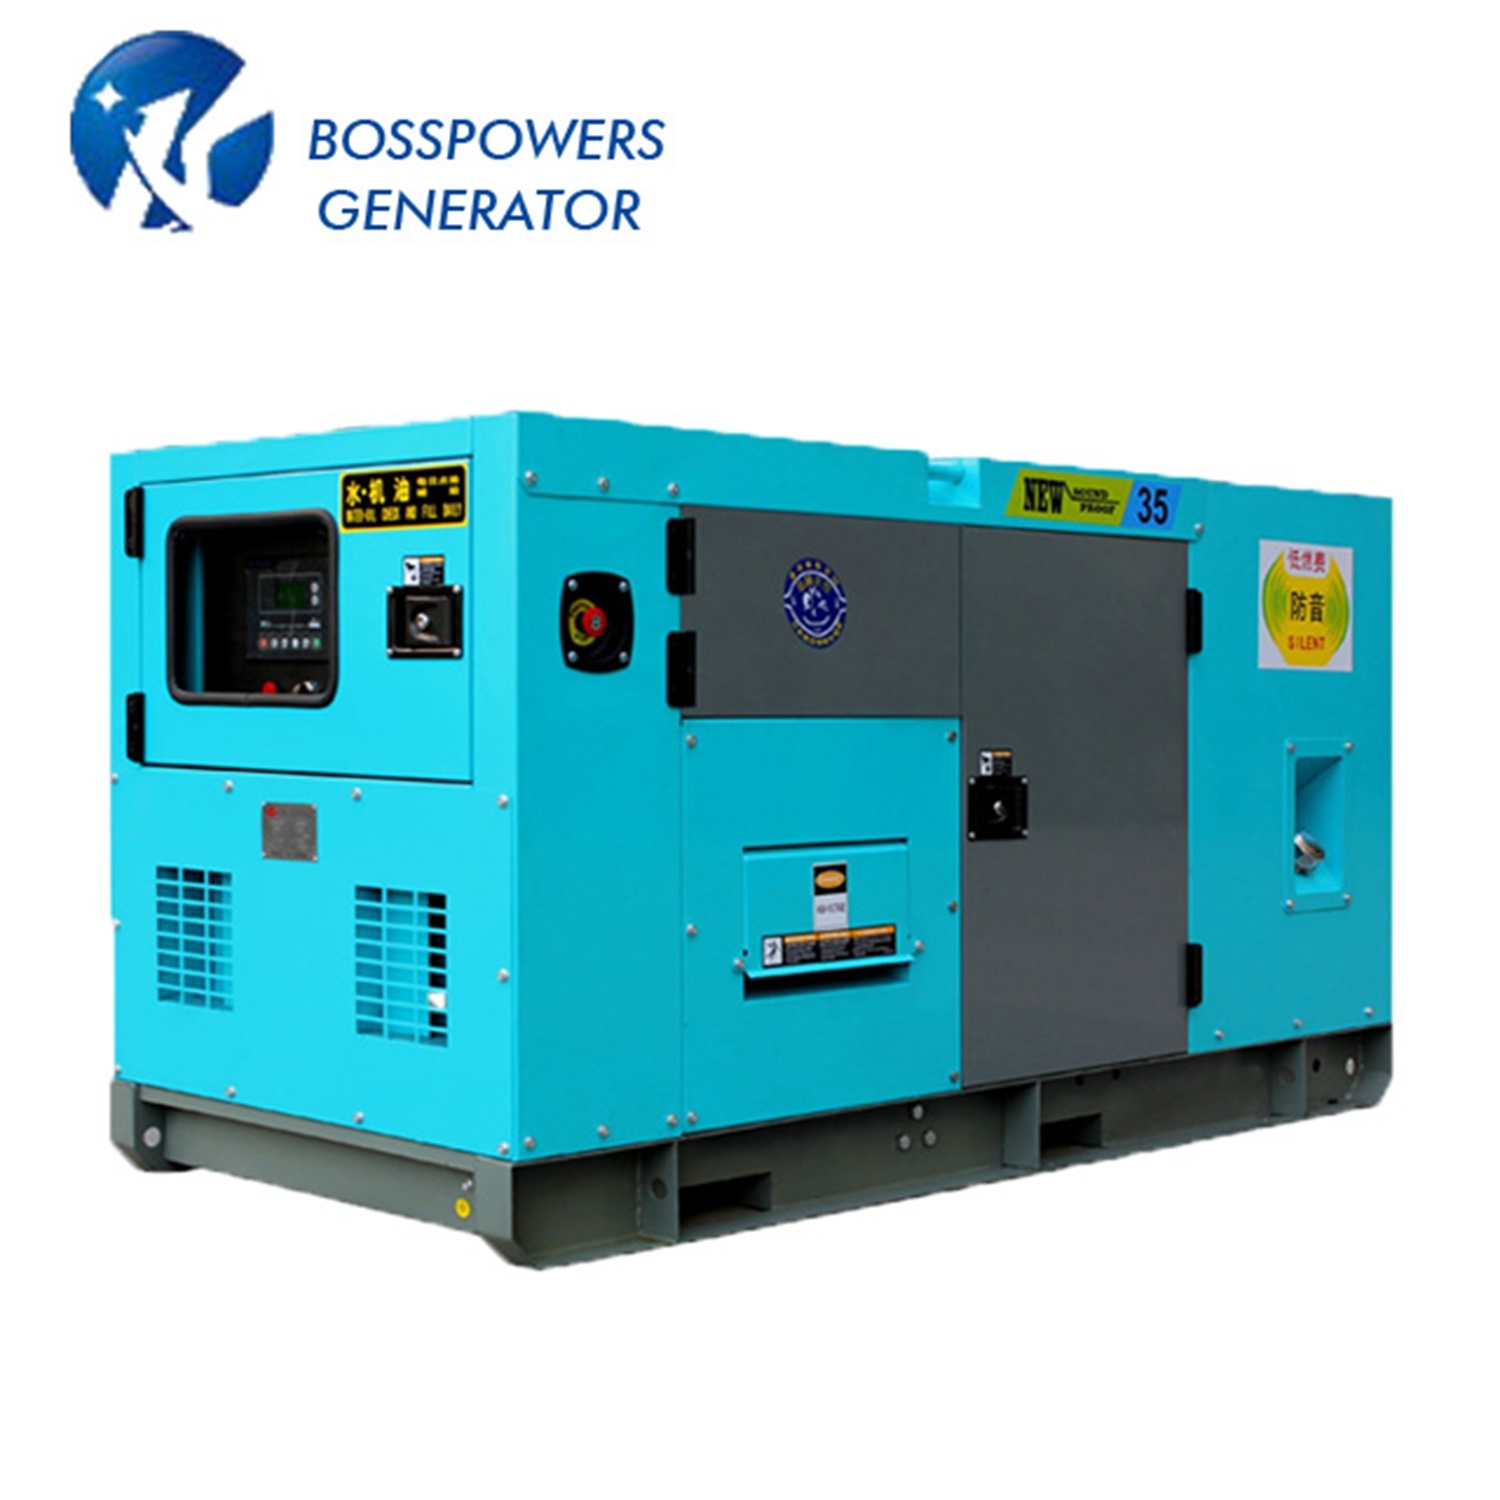 China Manufacturer Factory Direct 330kw Yuchai Electrical Diesel Generator